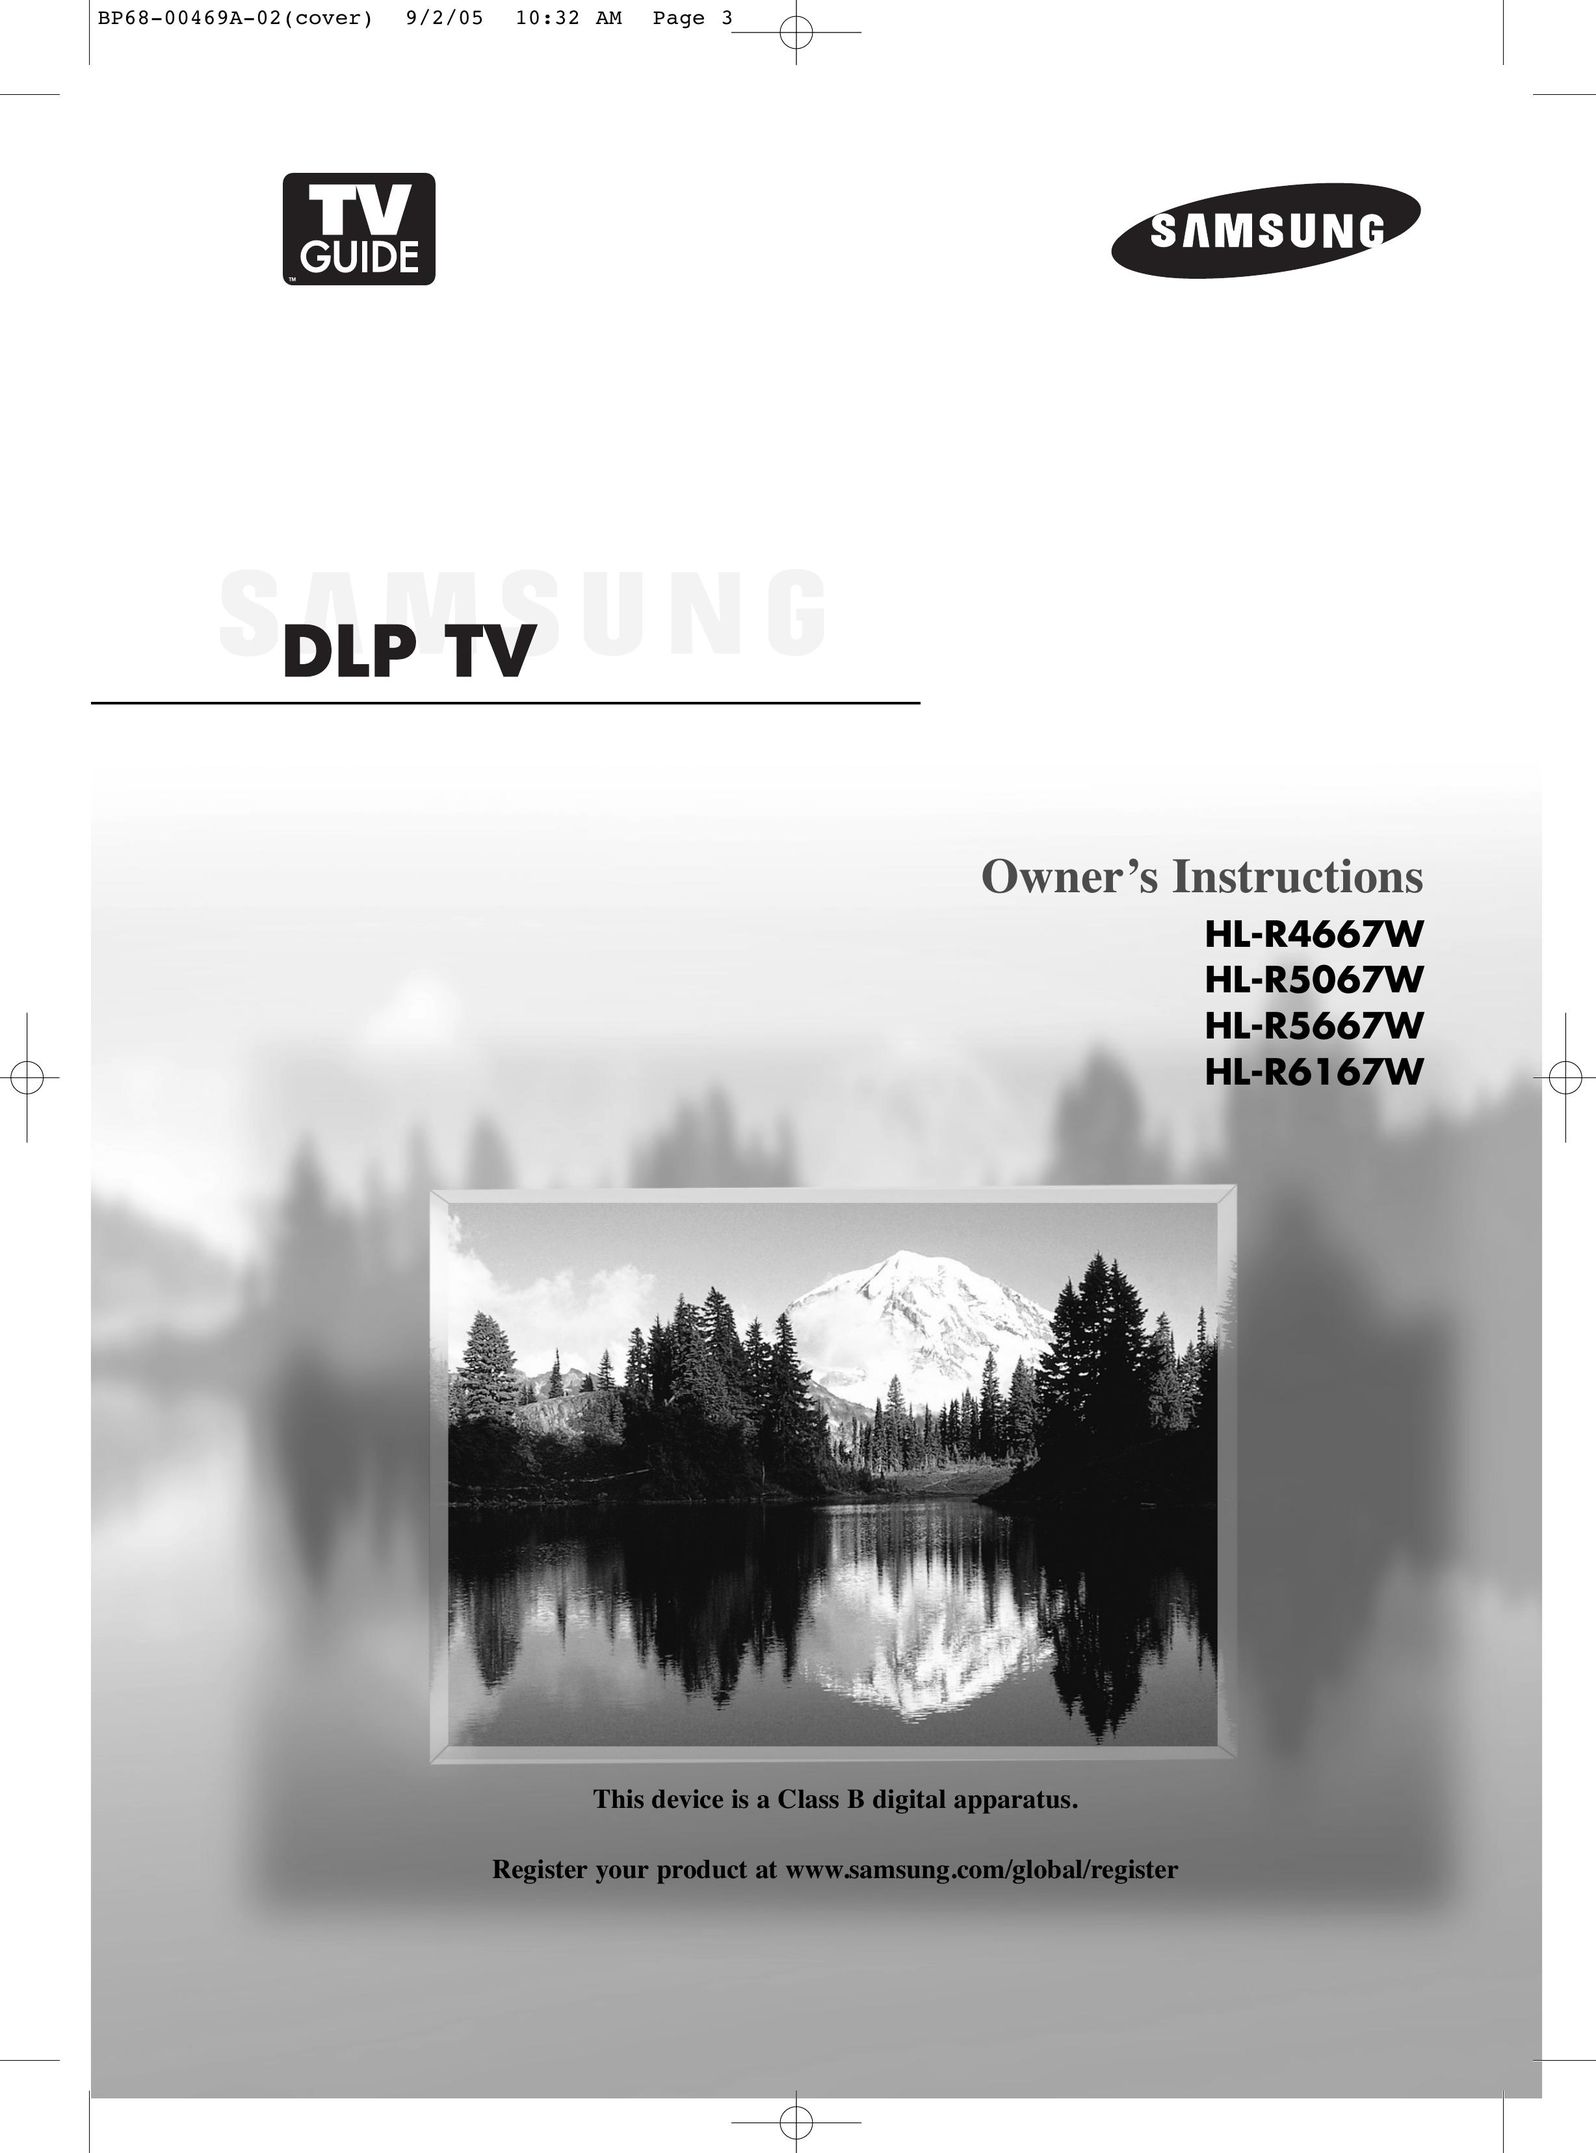 Samsung HL-R5667W TV Receiver User Manual